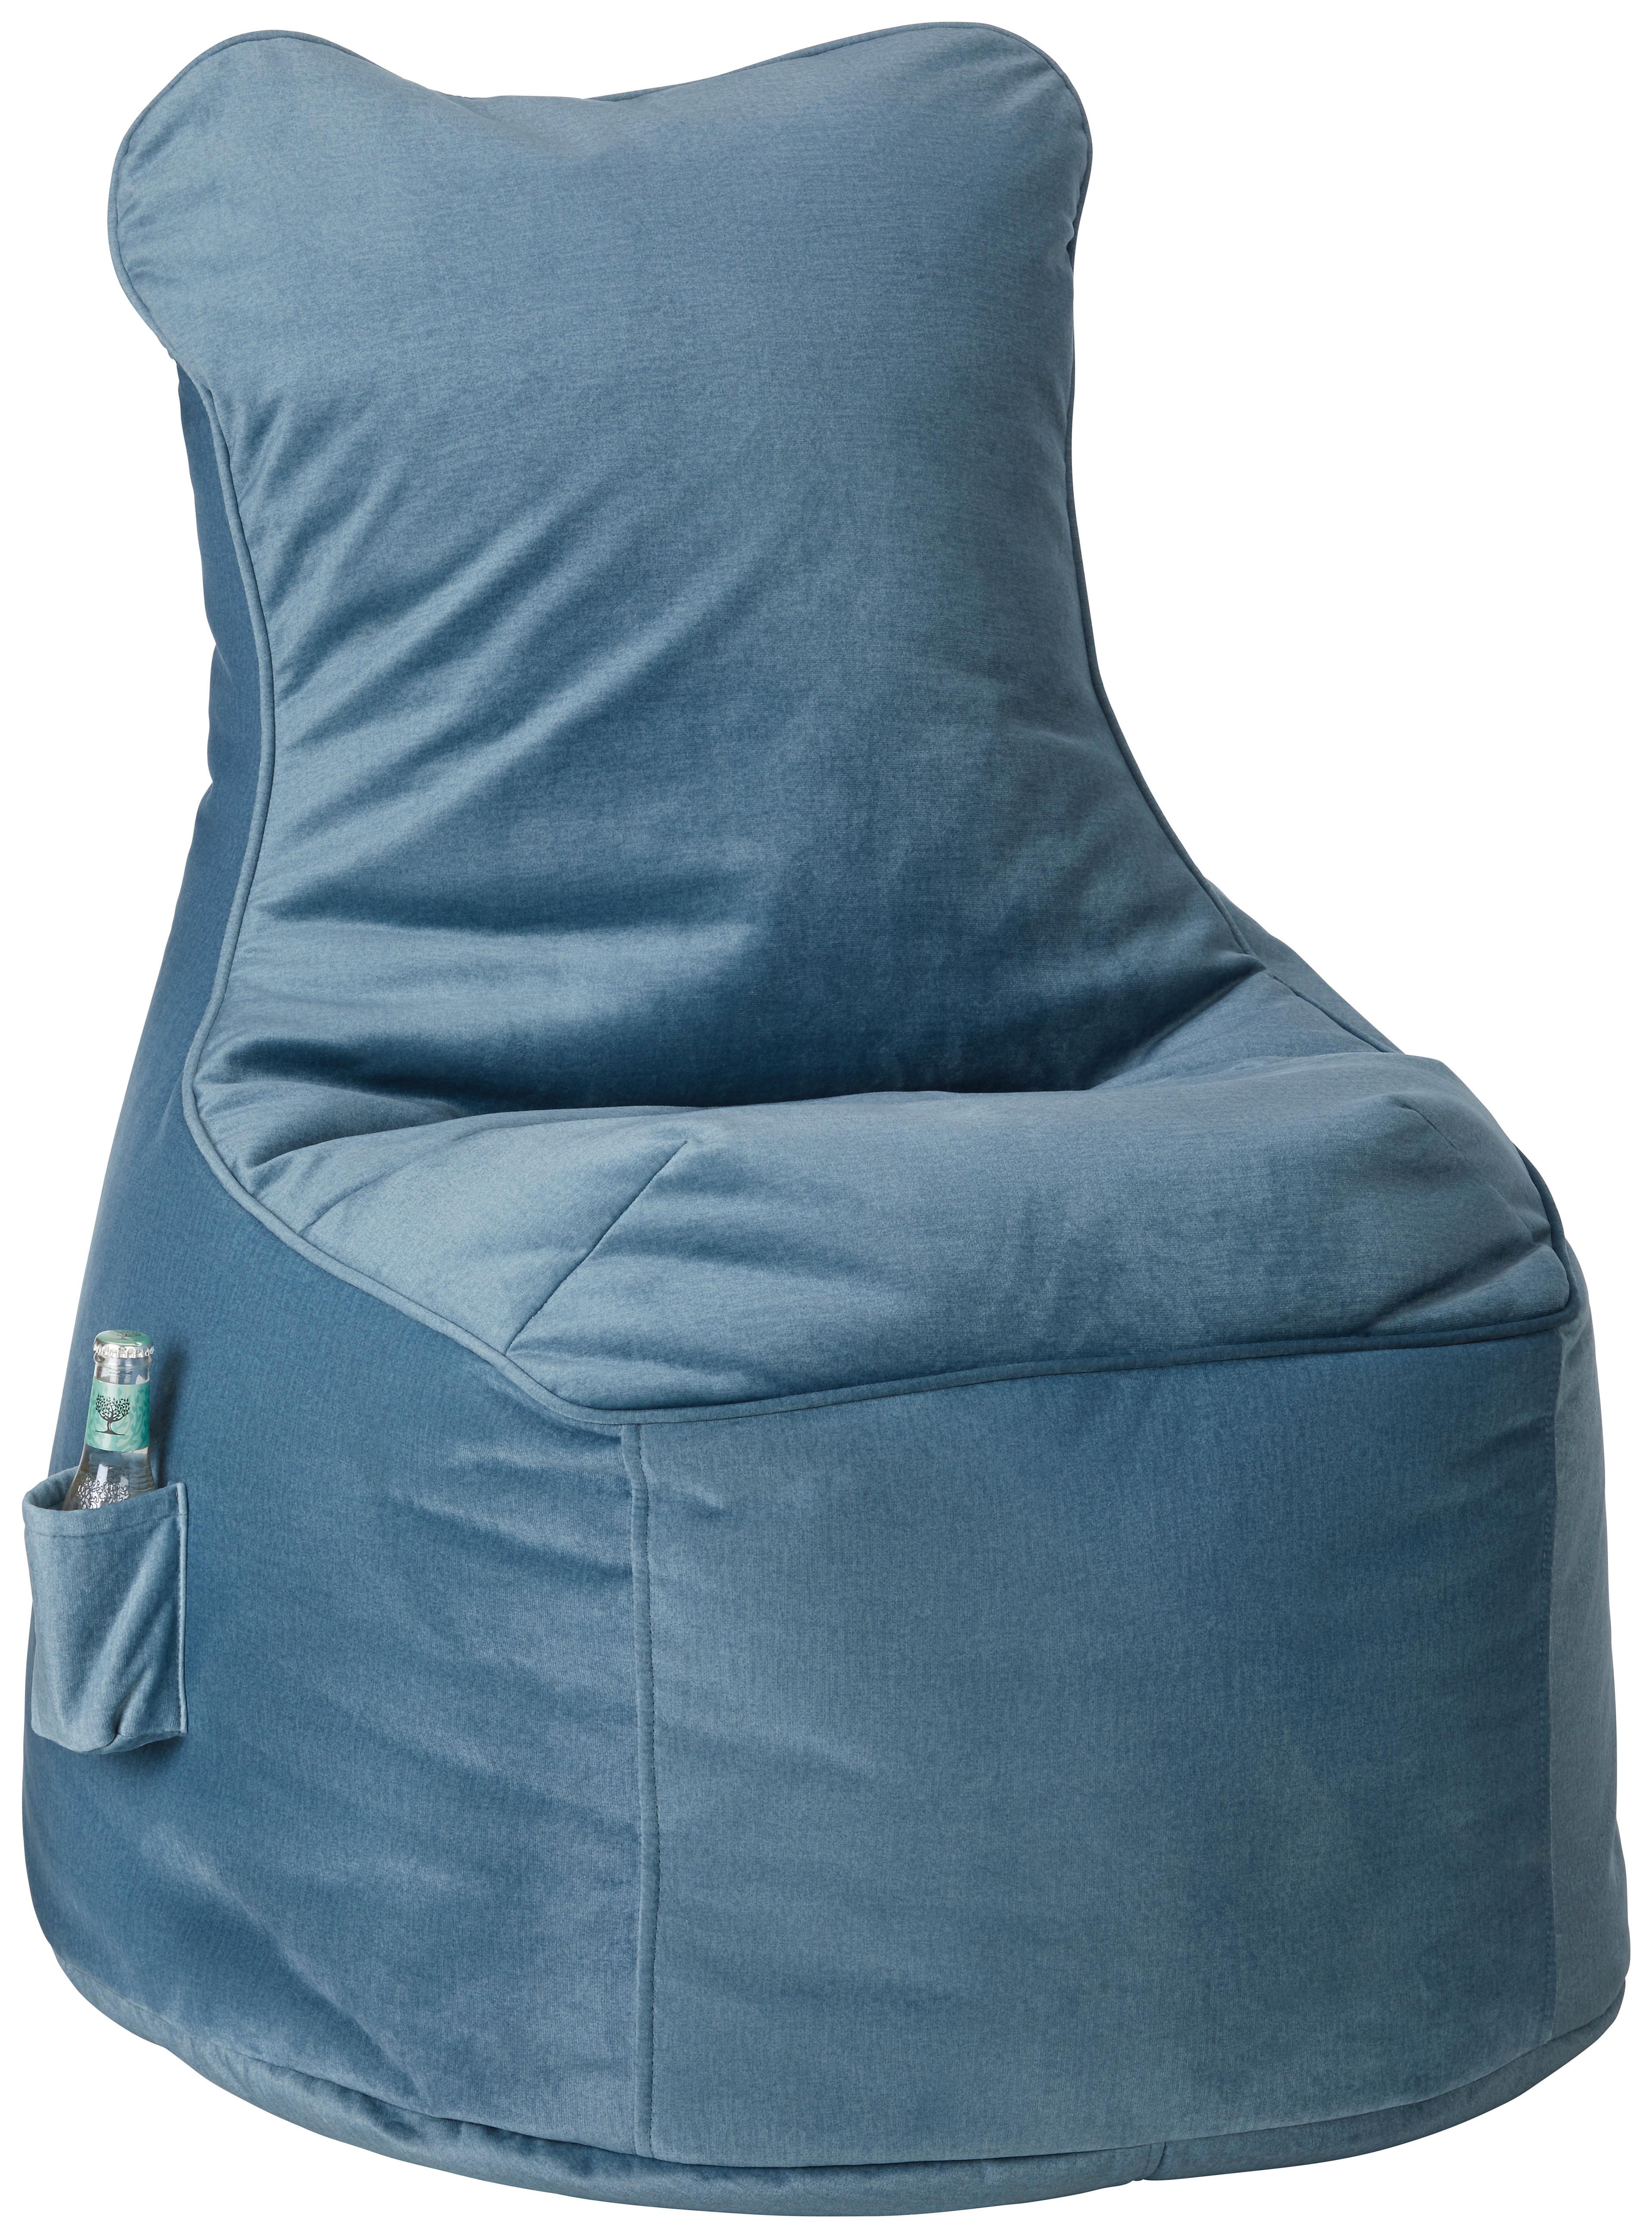 Sitzsack in Aqua - Blau, Textil (75/95/65cm) - Modern Living